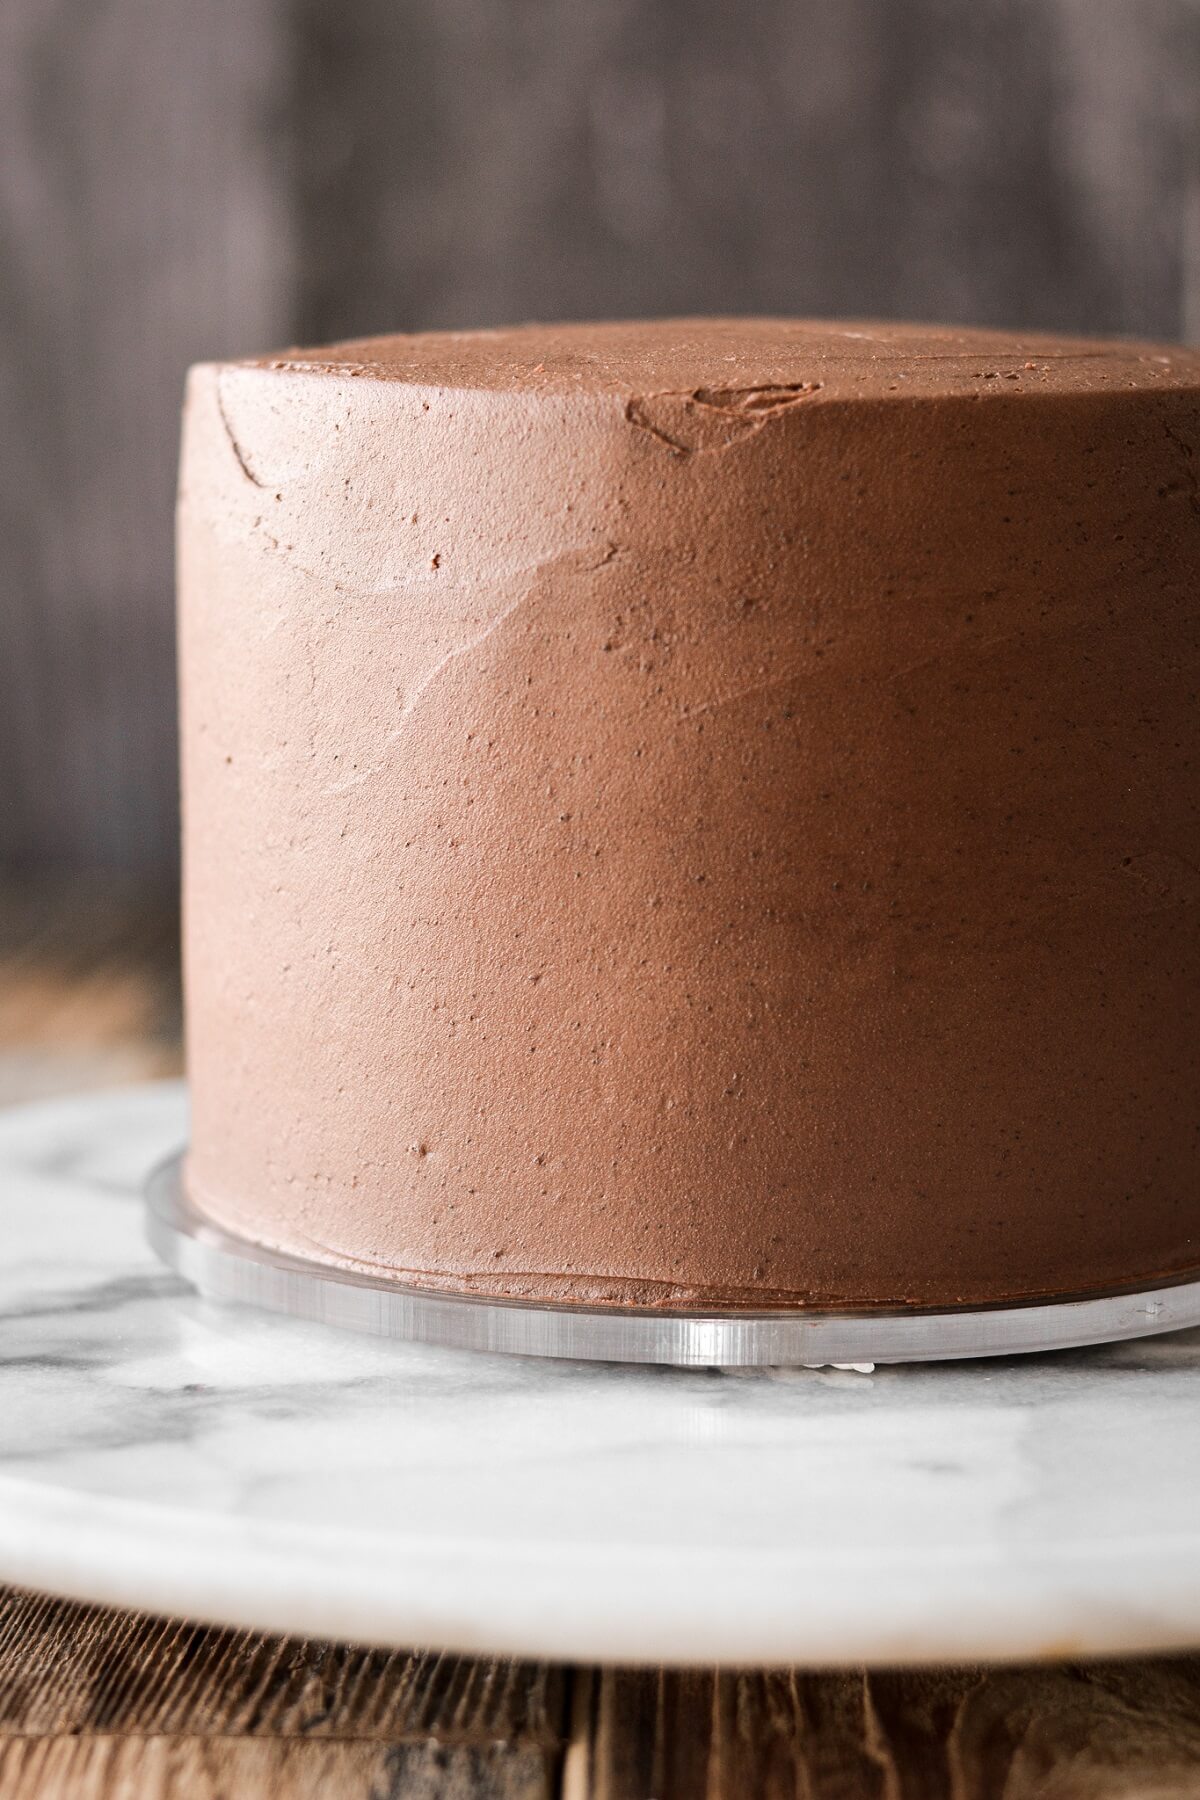 Chocolate buttercream on a chocolate cake.